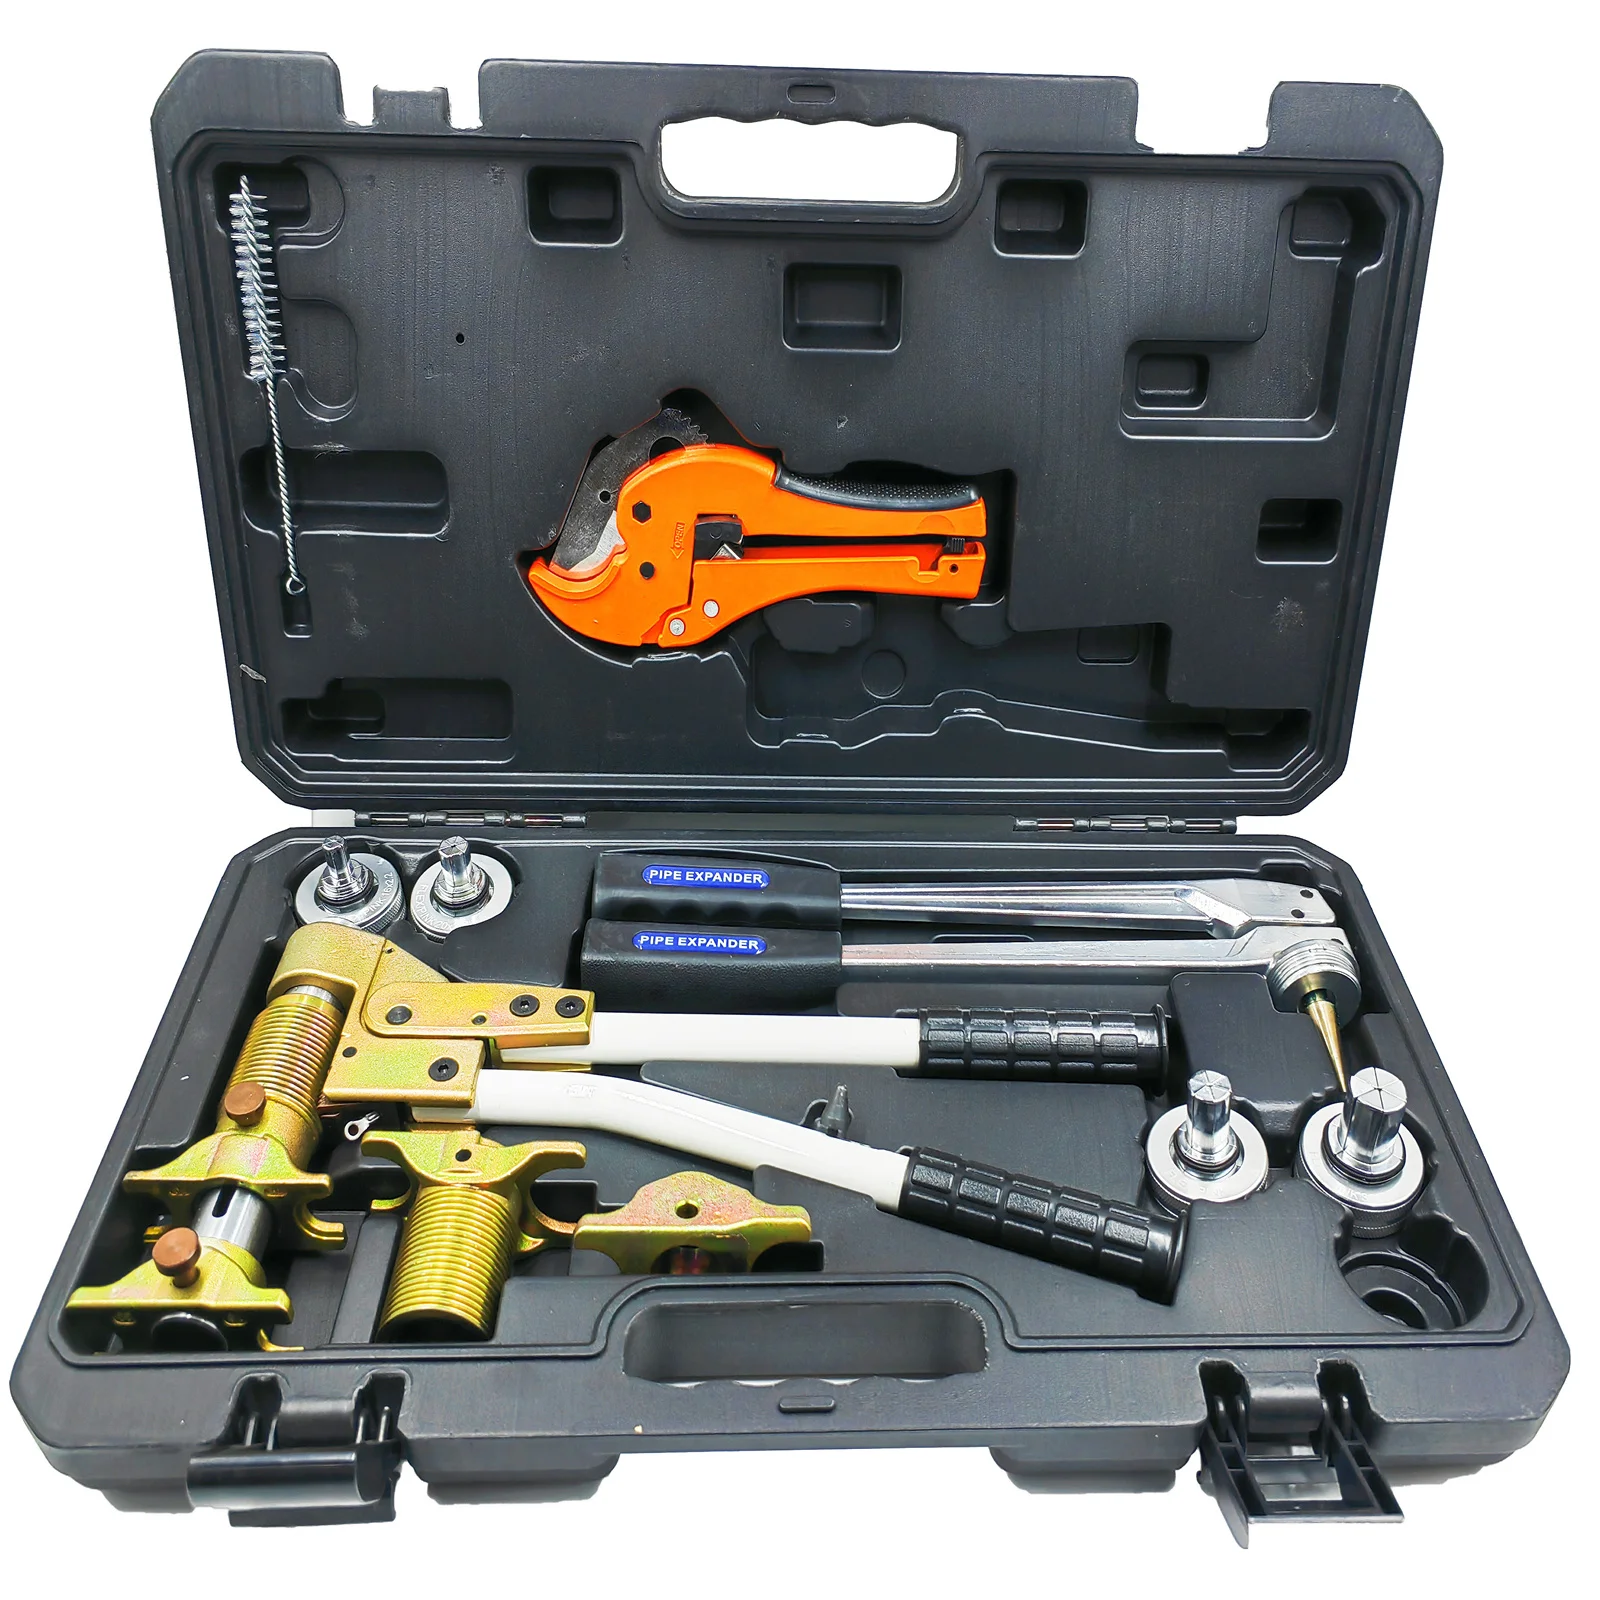 rehau-plumbing-tools-pex-fitting-tool-pex-1632-range-16-32mm-fork-rehau-fittings-with-good-quality-popular-tool-100-guarantee